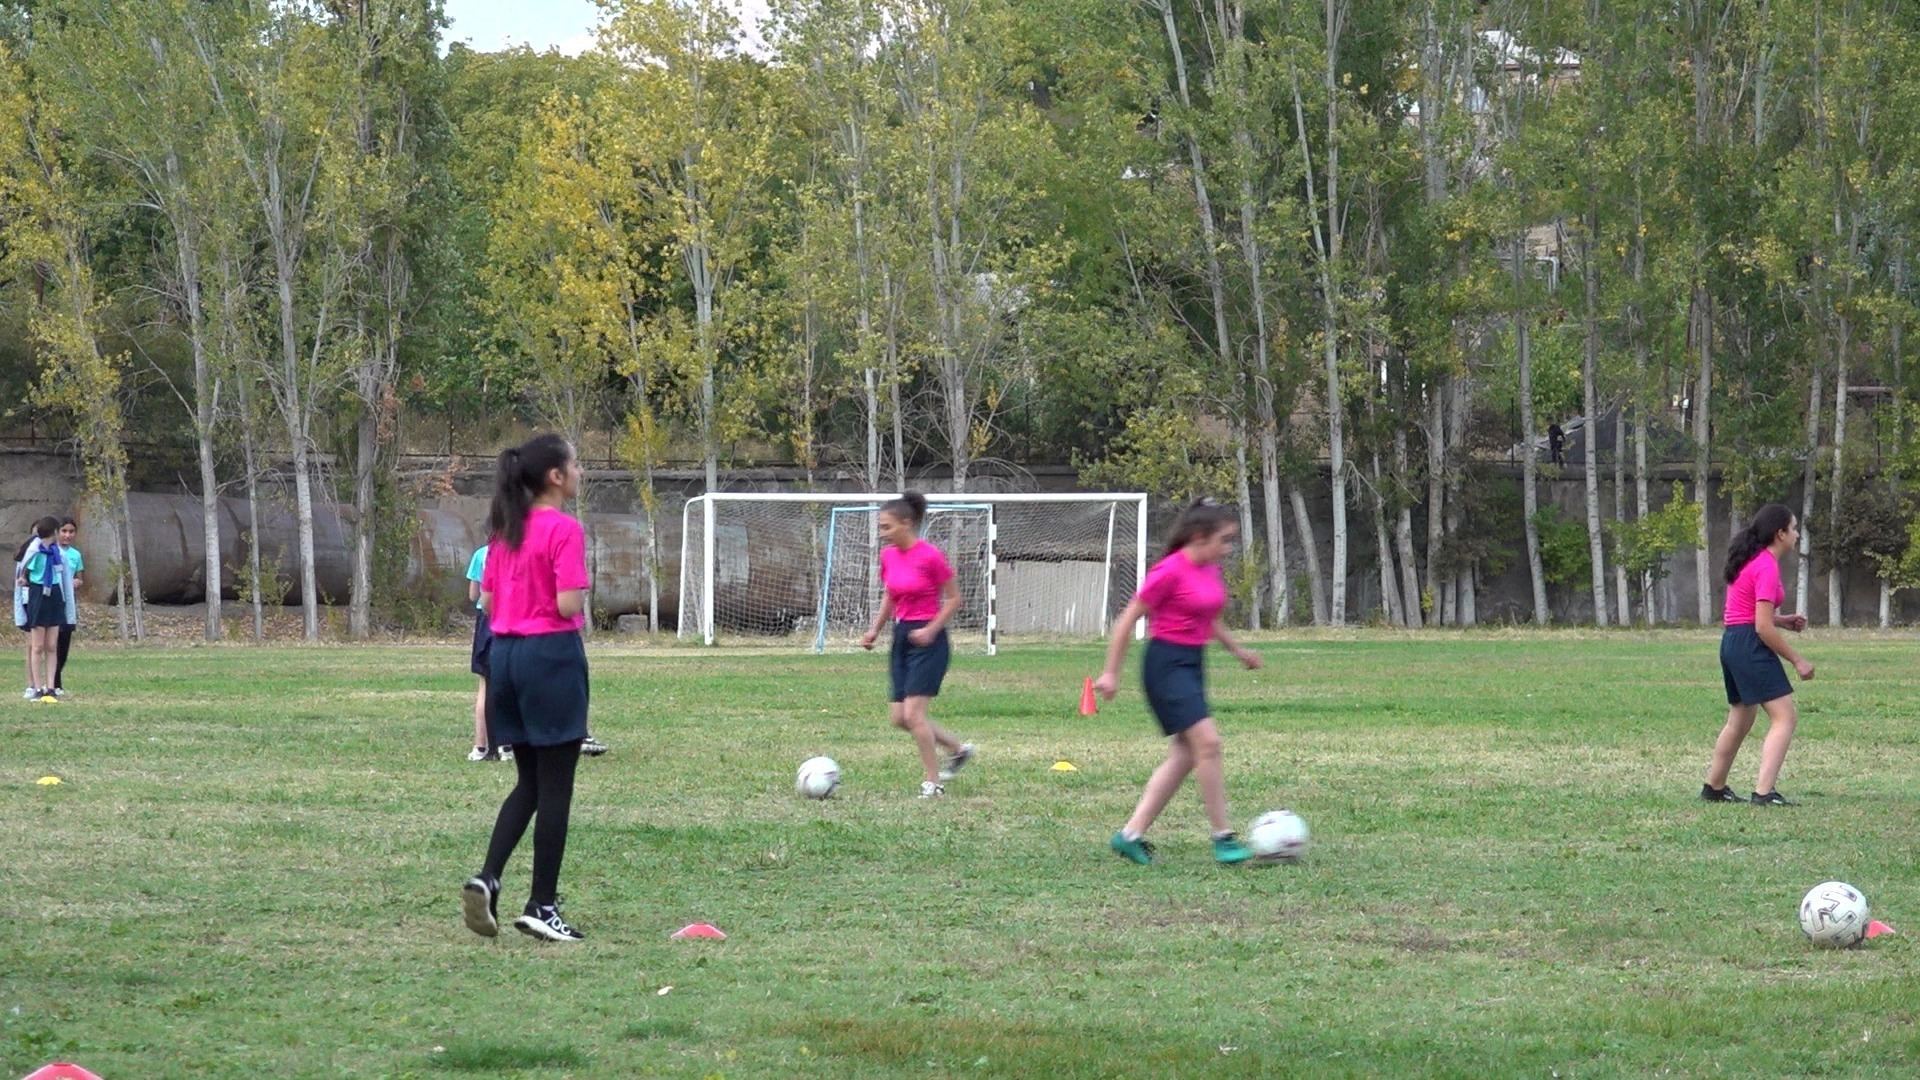 “Play it forward”, Soccer Girls Break Stereotypes in Armenia